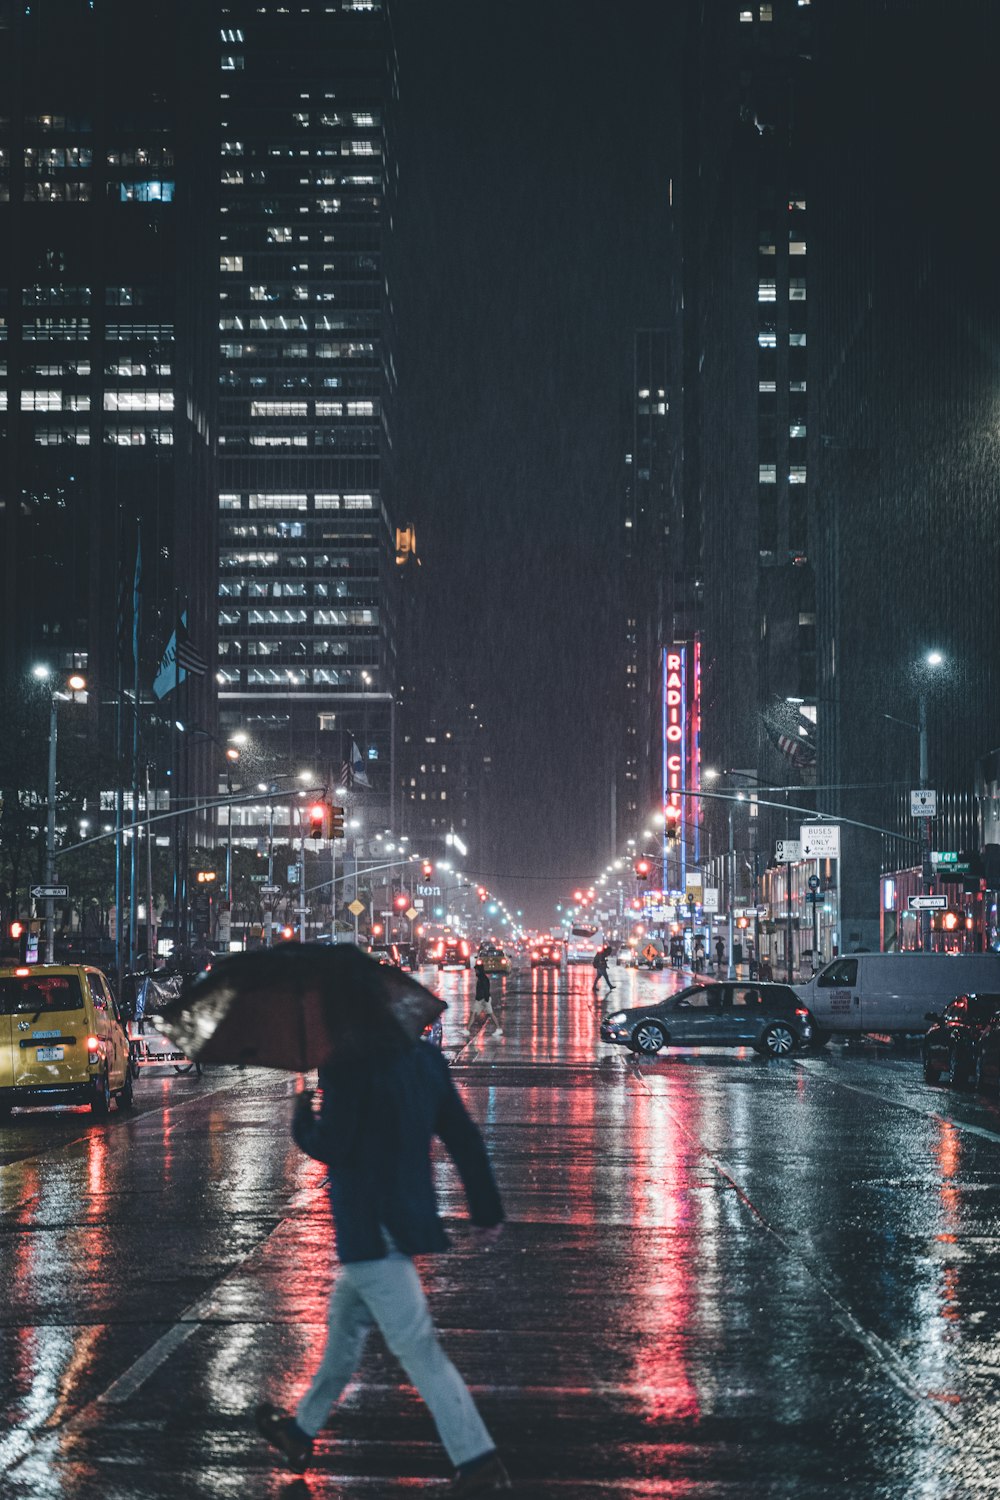 man crossing road with umbrella